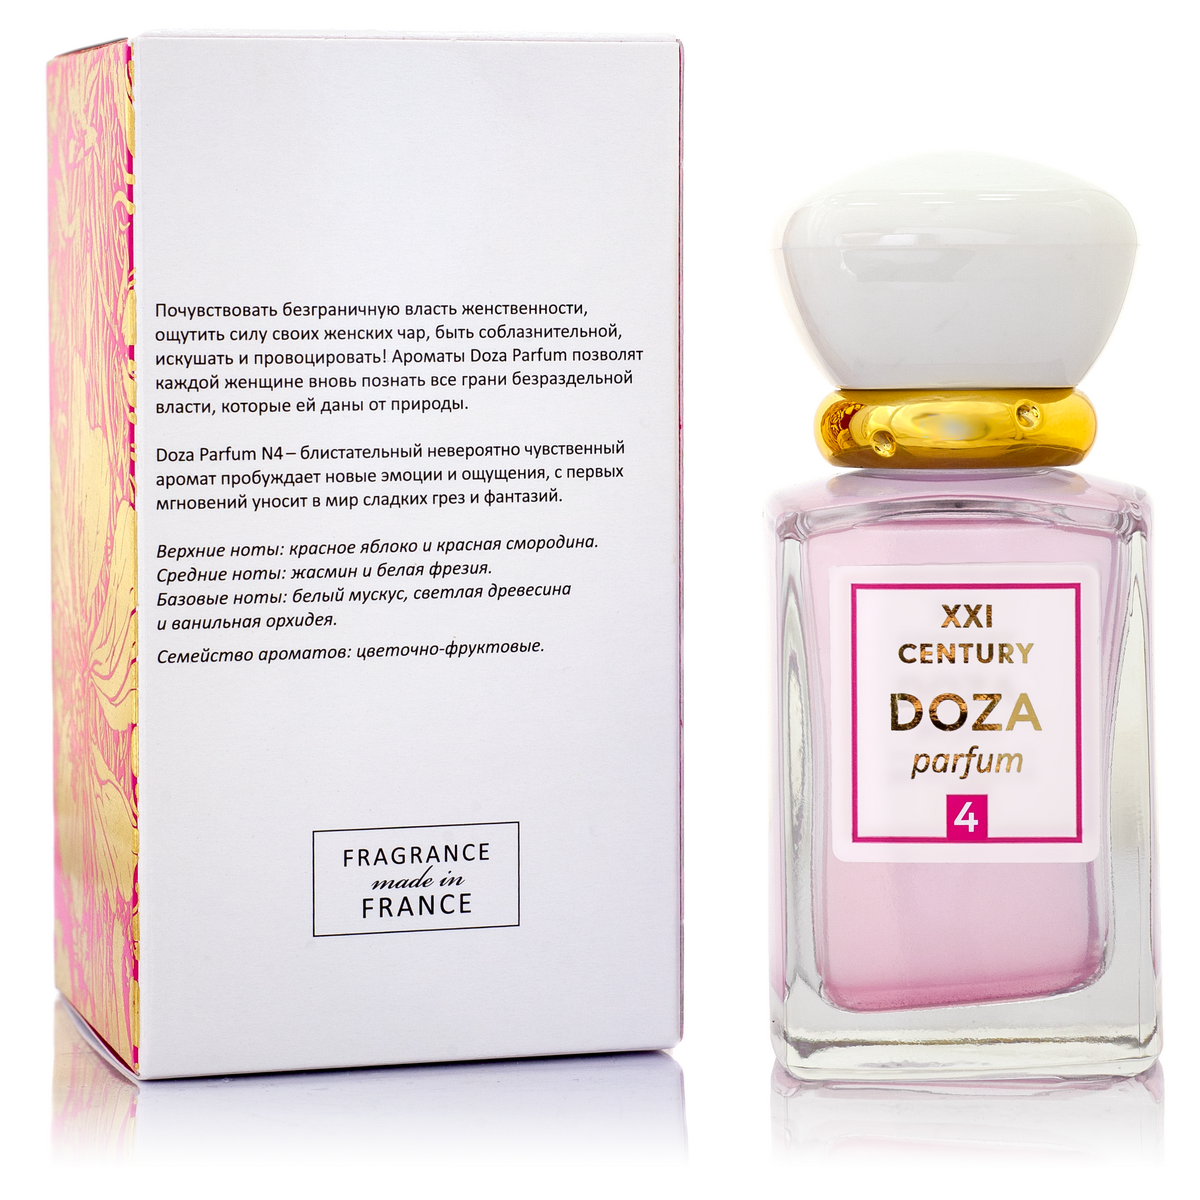 Духи XXI CENTURY DOZA parfum №4 50 мл - фото 3